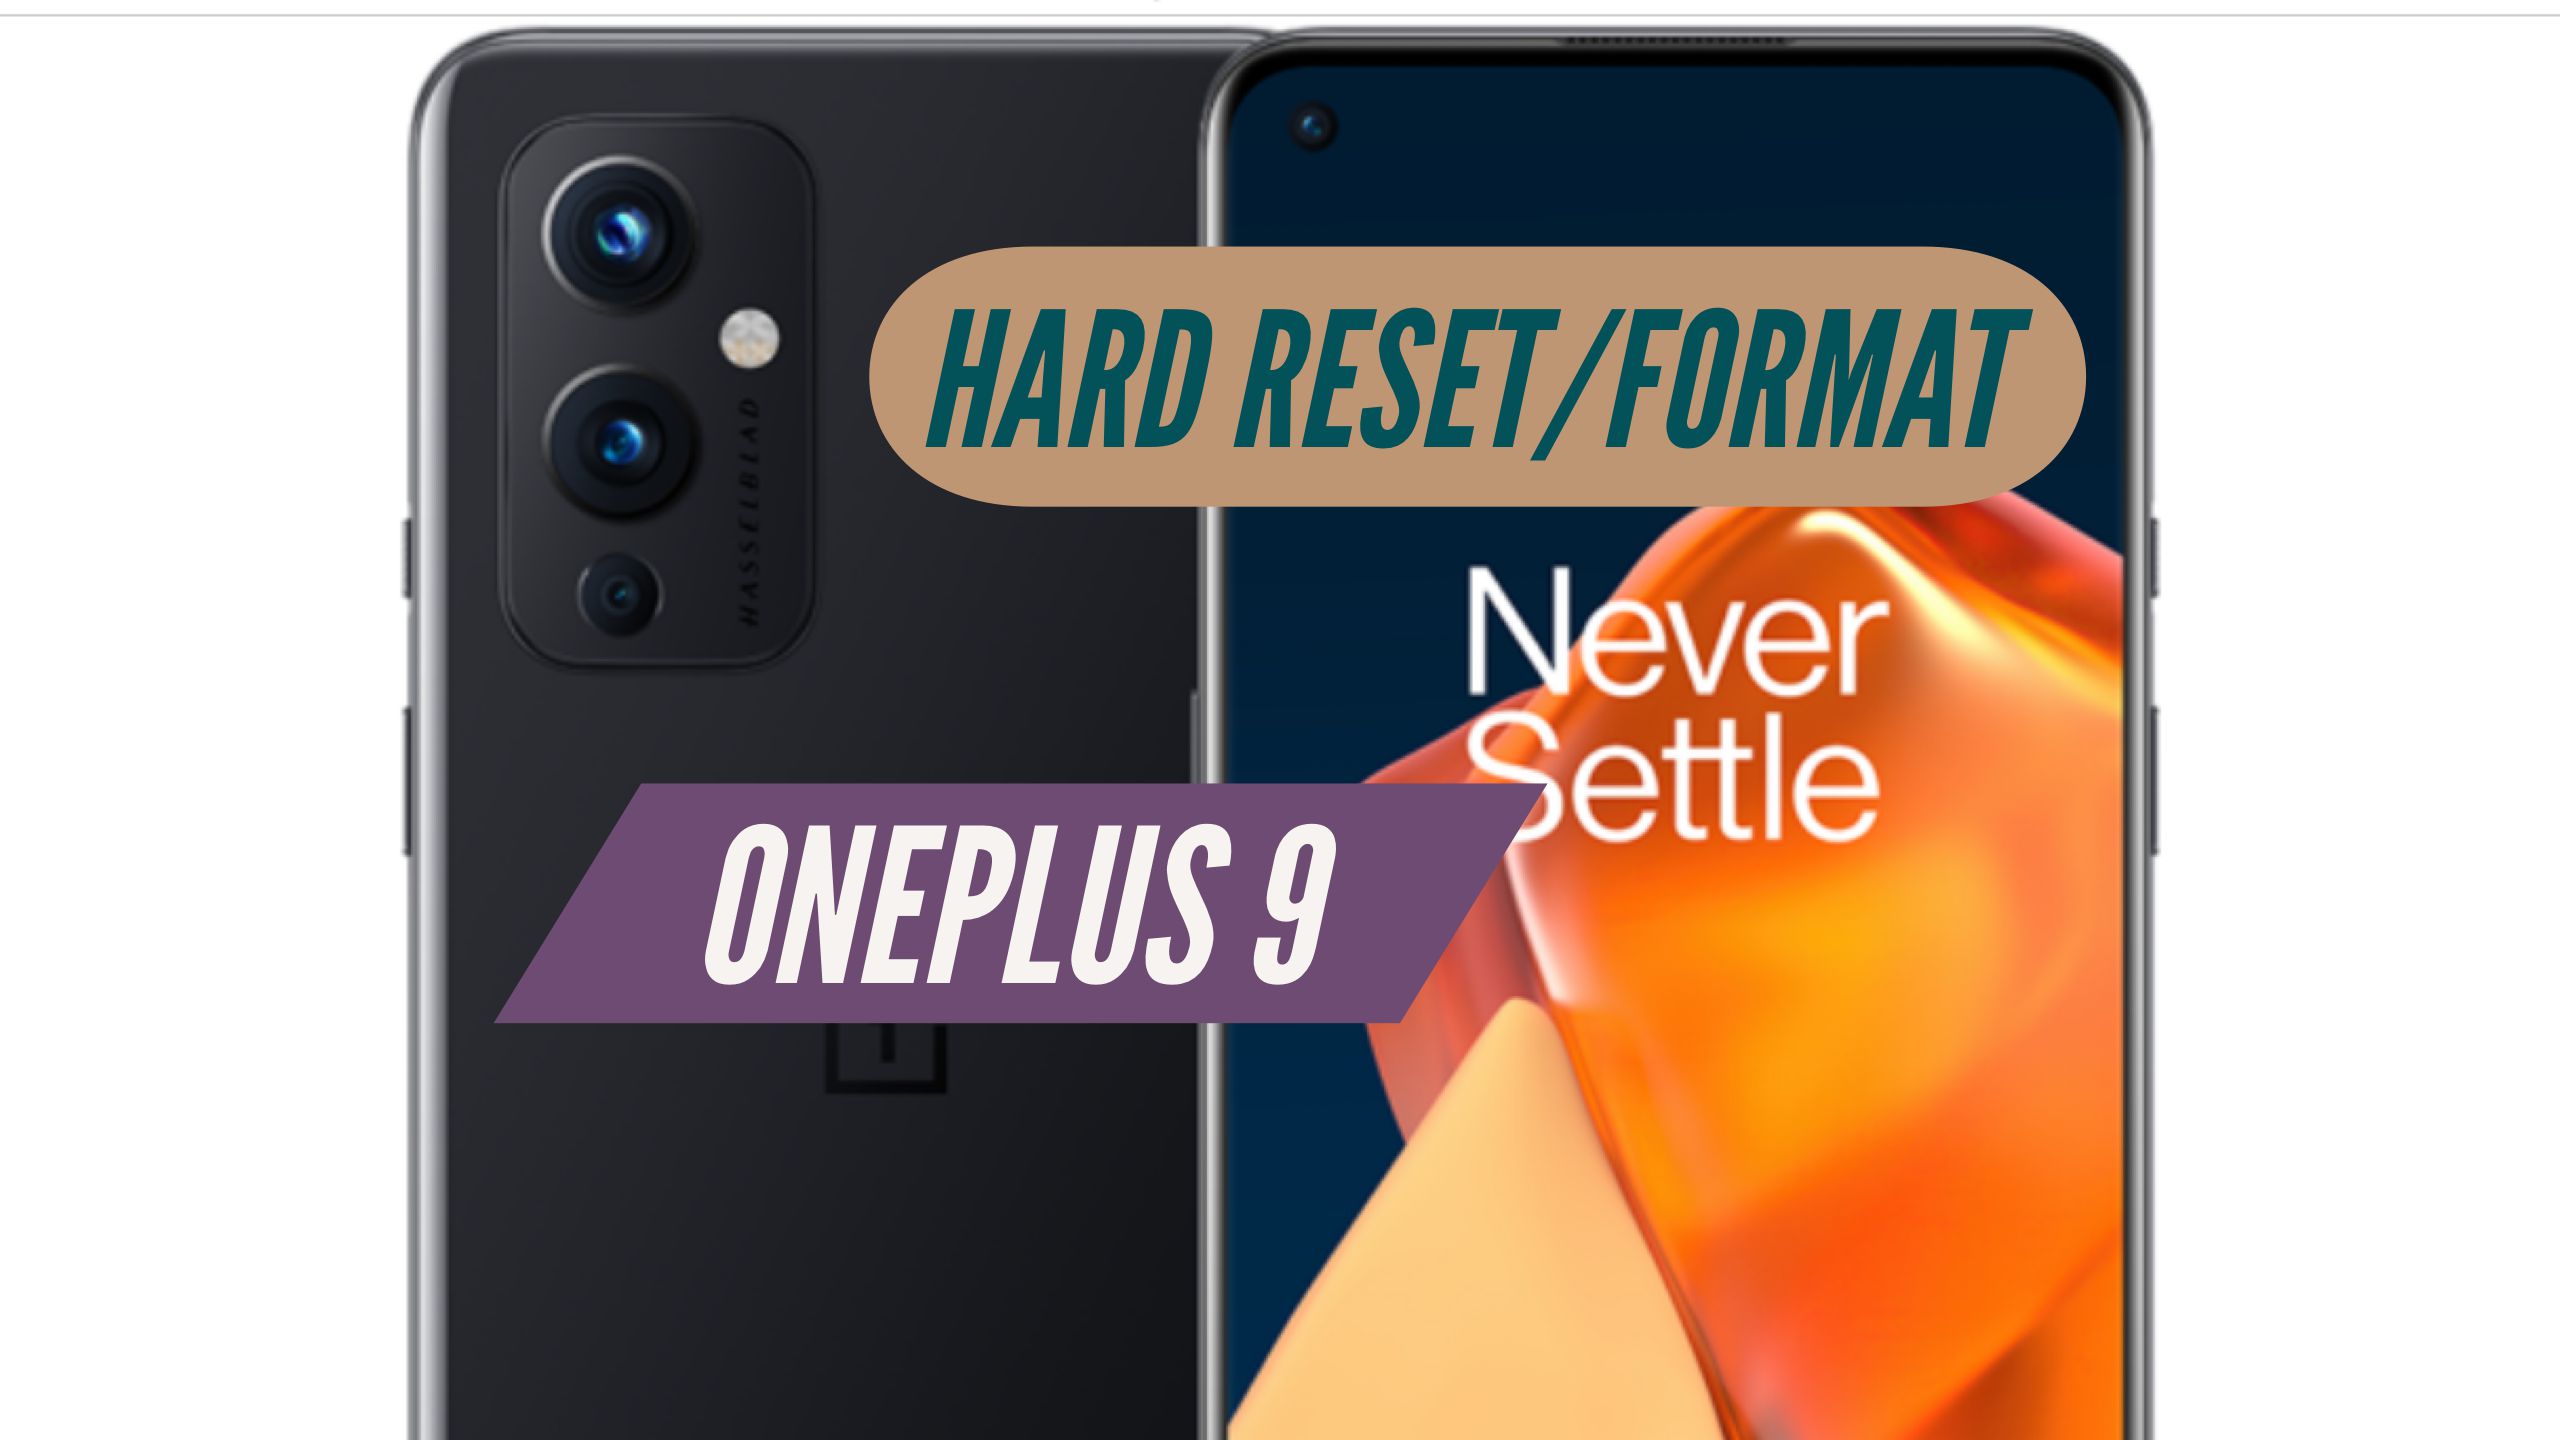 OnePlus 9 Hard Reset Format